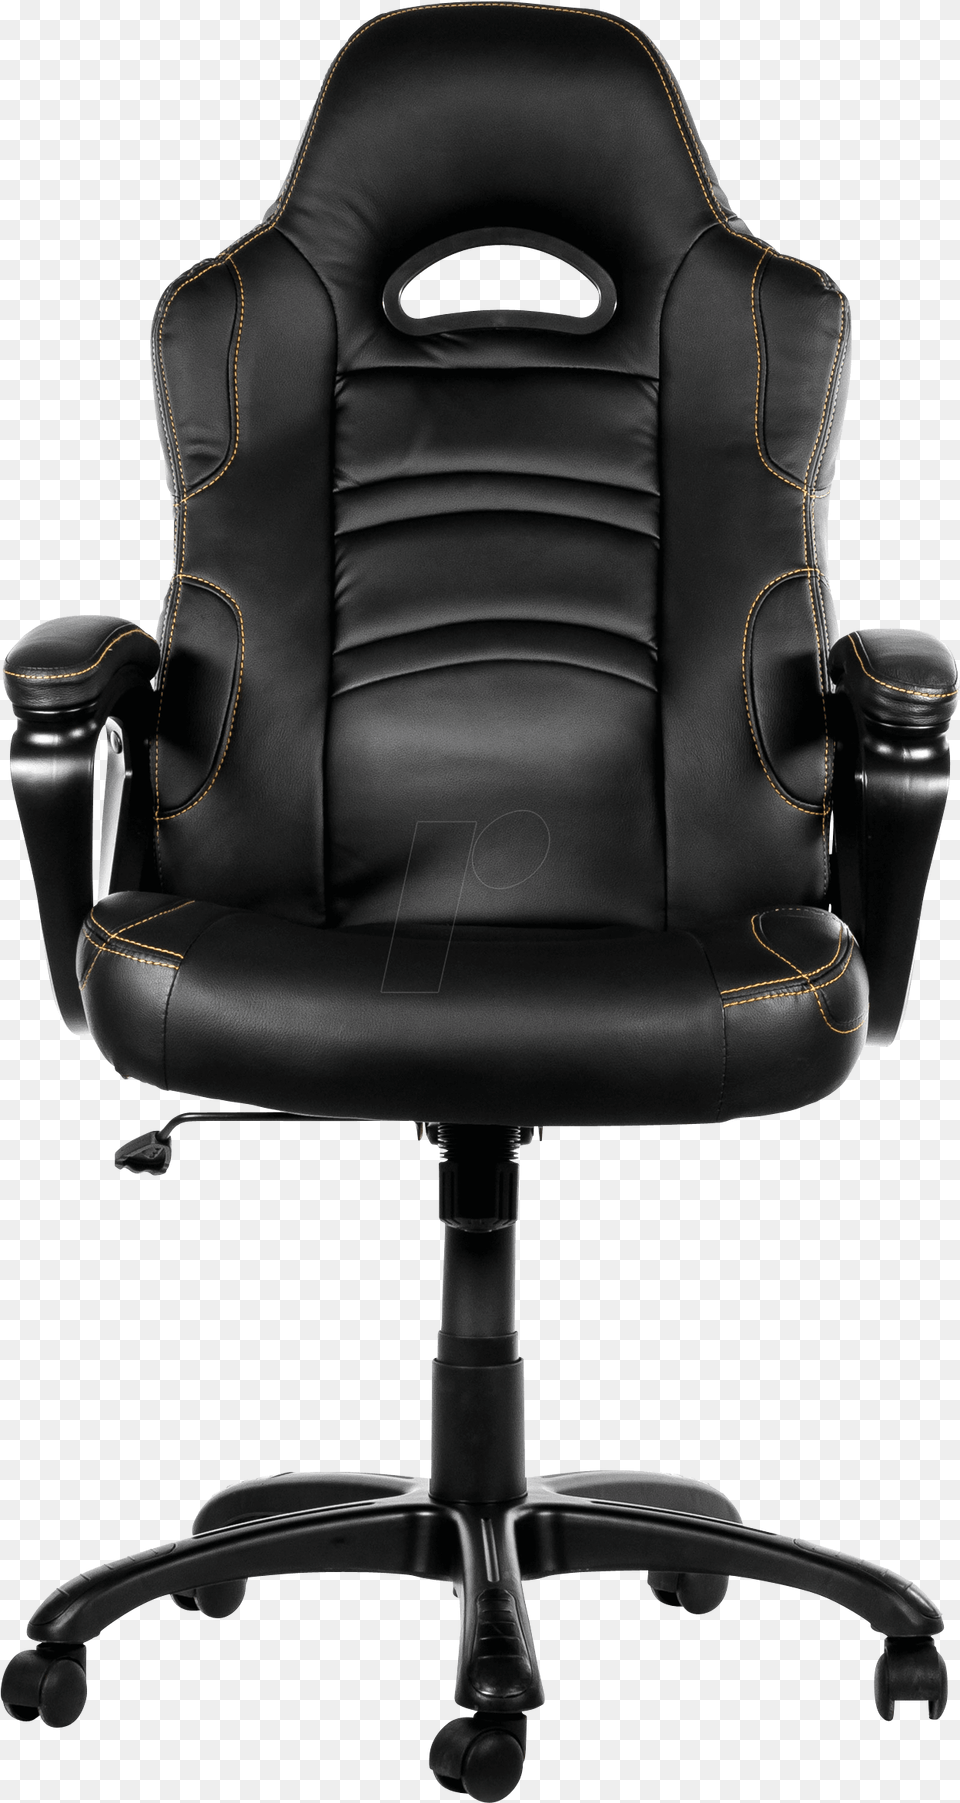 Arozzi Enzo Gaming Chair Black, Furniture, Cushion, Home Decor, Armchair Png